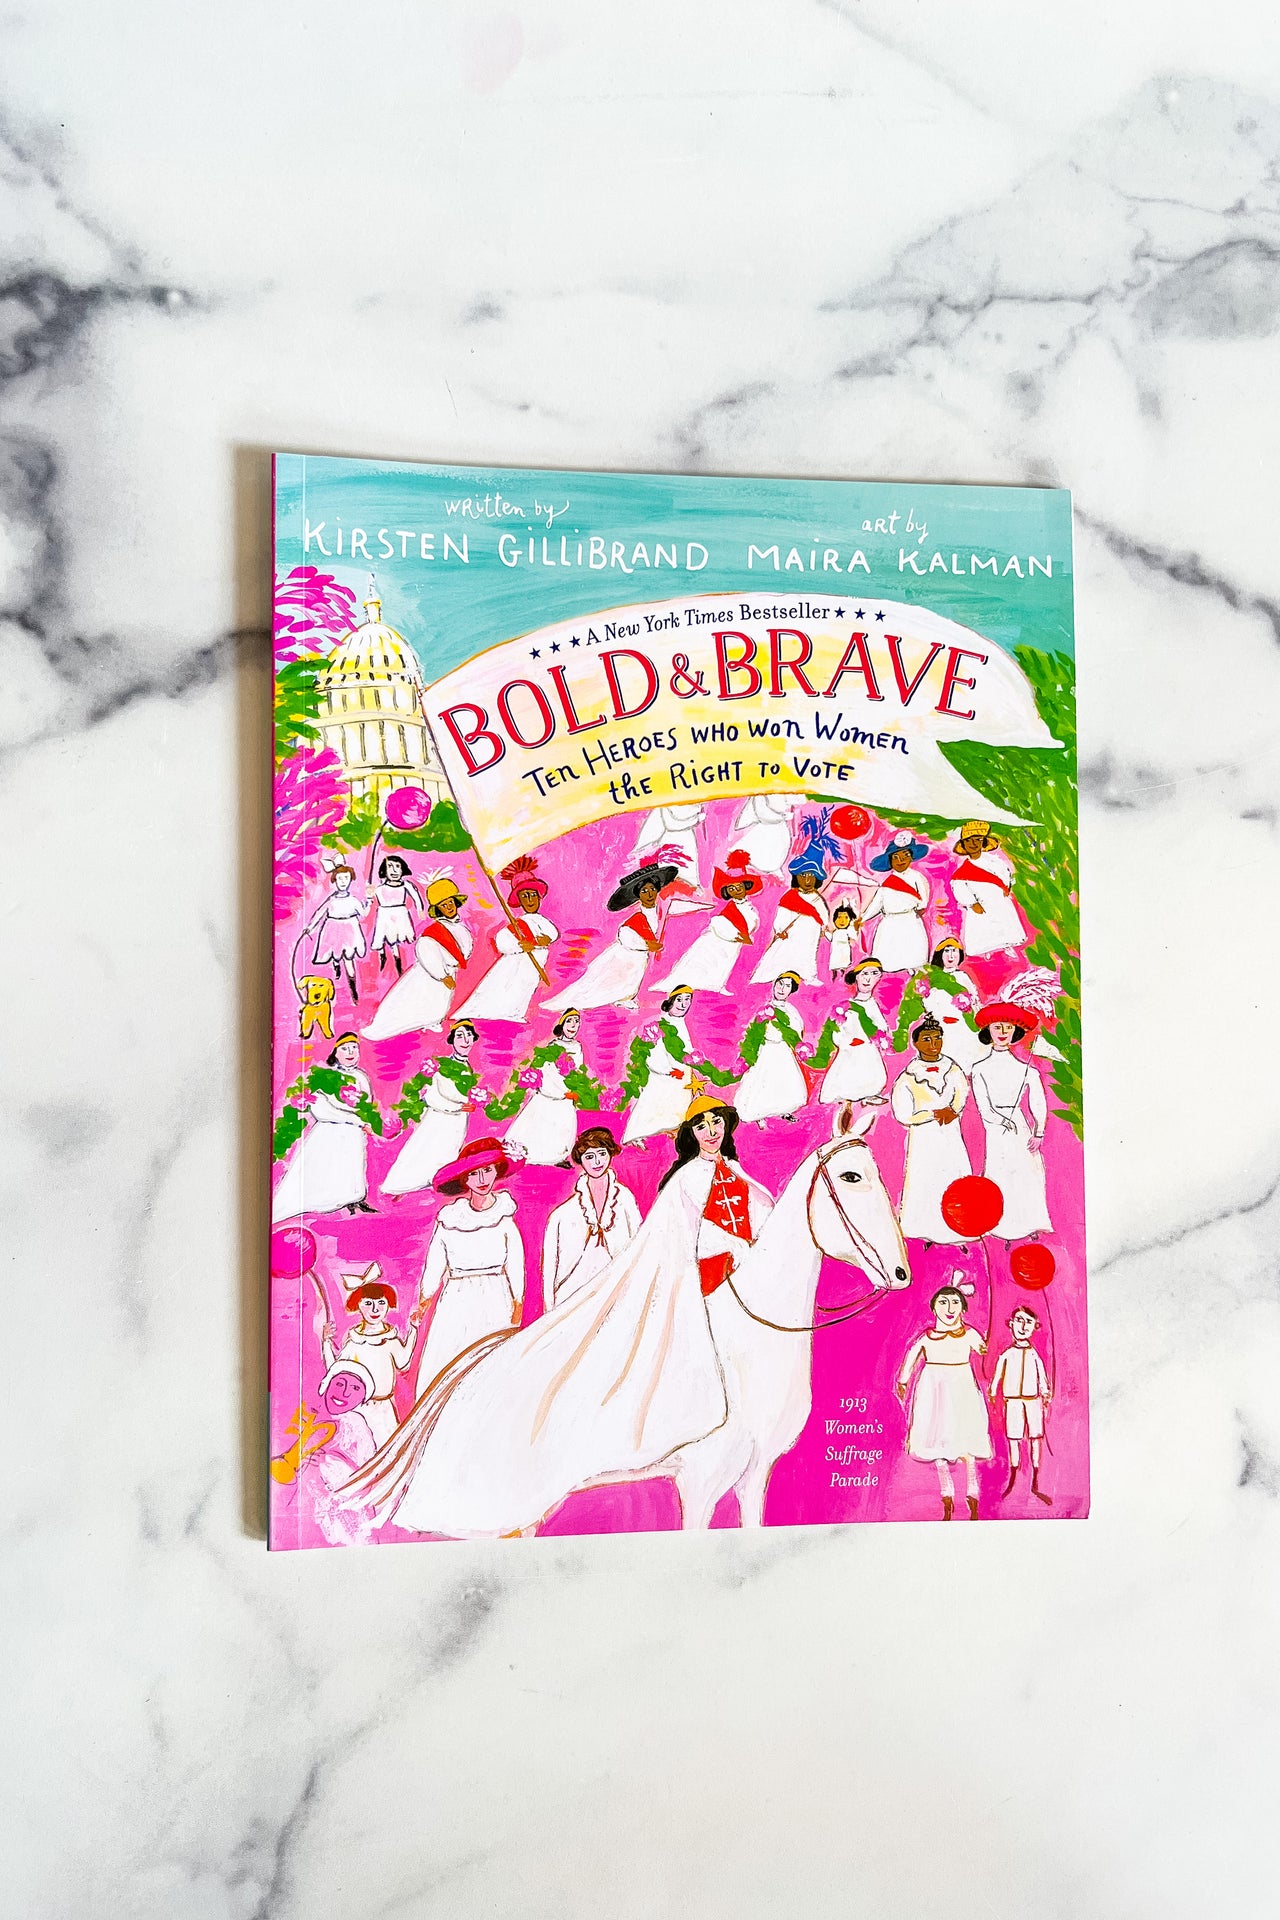 Bold & Brave Book